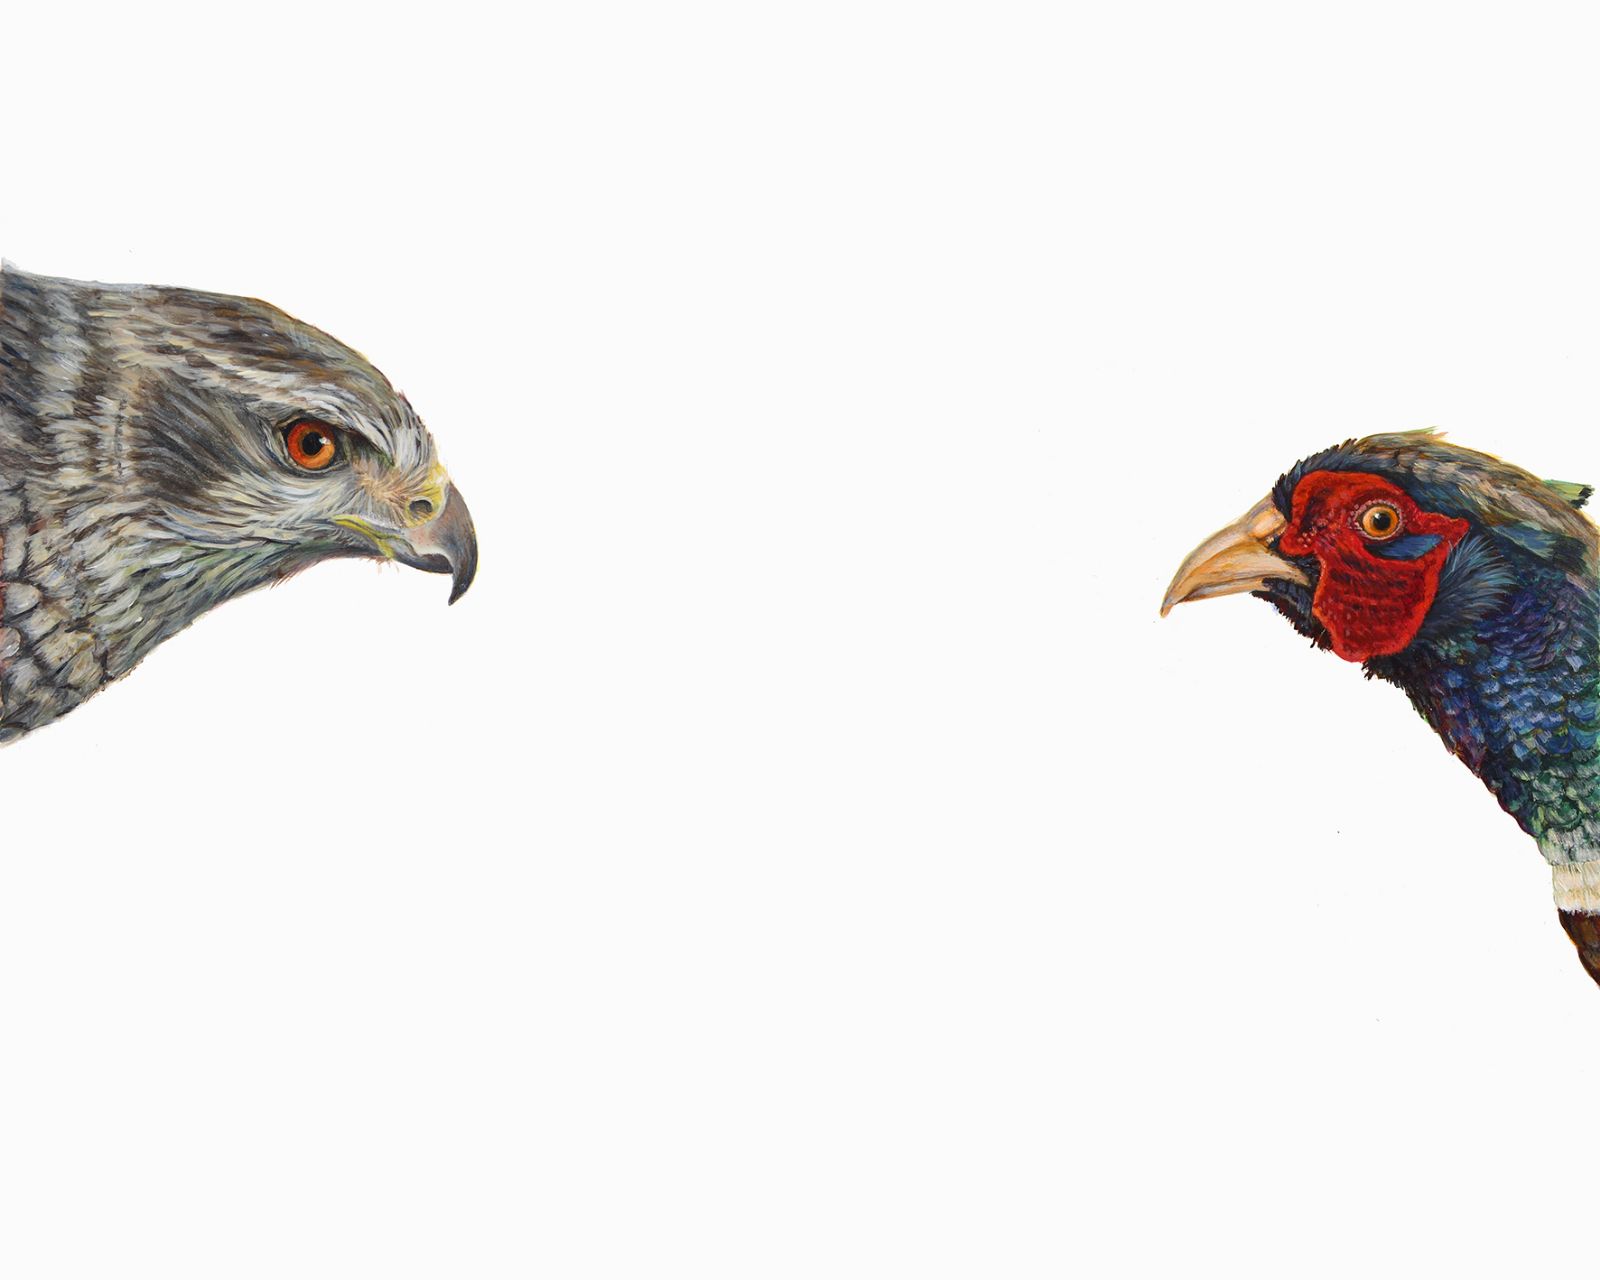 Top Predator: Hawk & Pheasant by Hazel Mountford